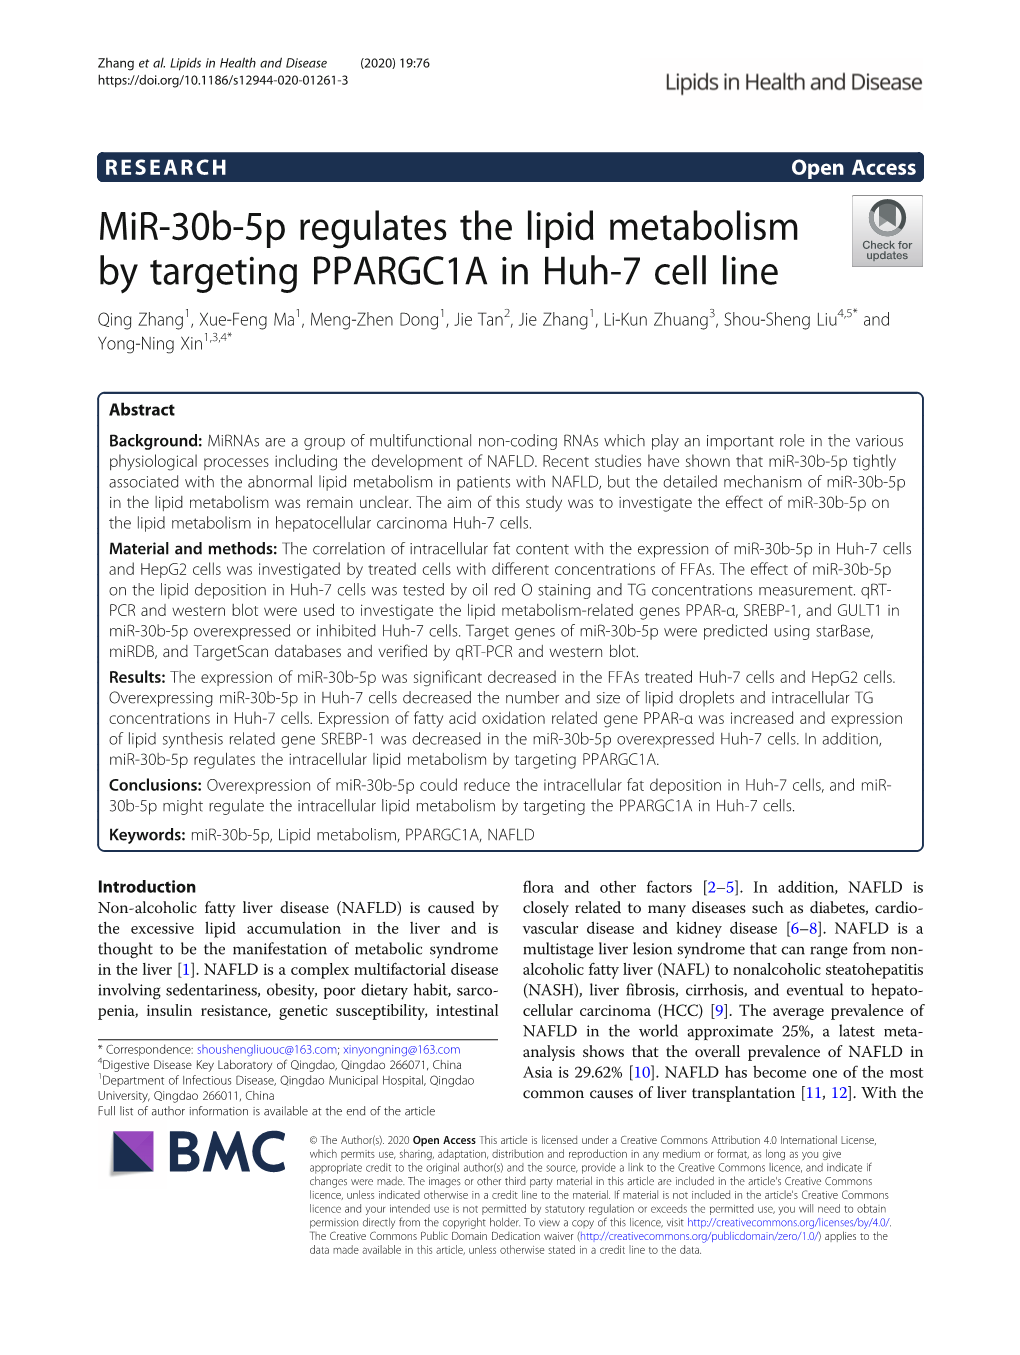 Mir-30B-5P Regulates the Lipid Metabolism by Targeting